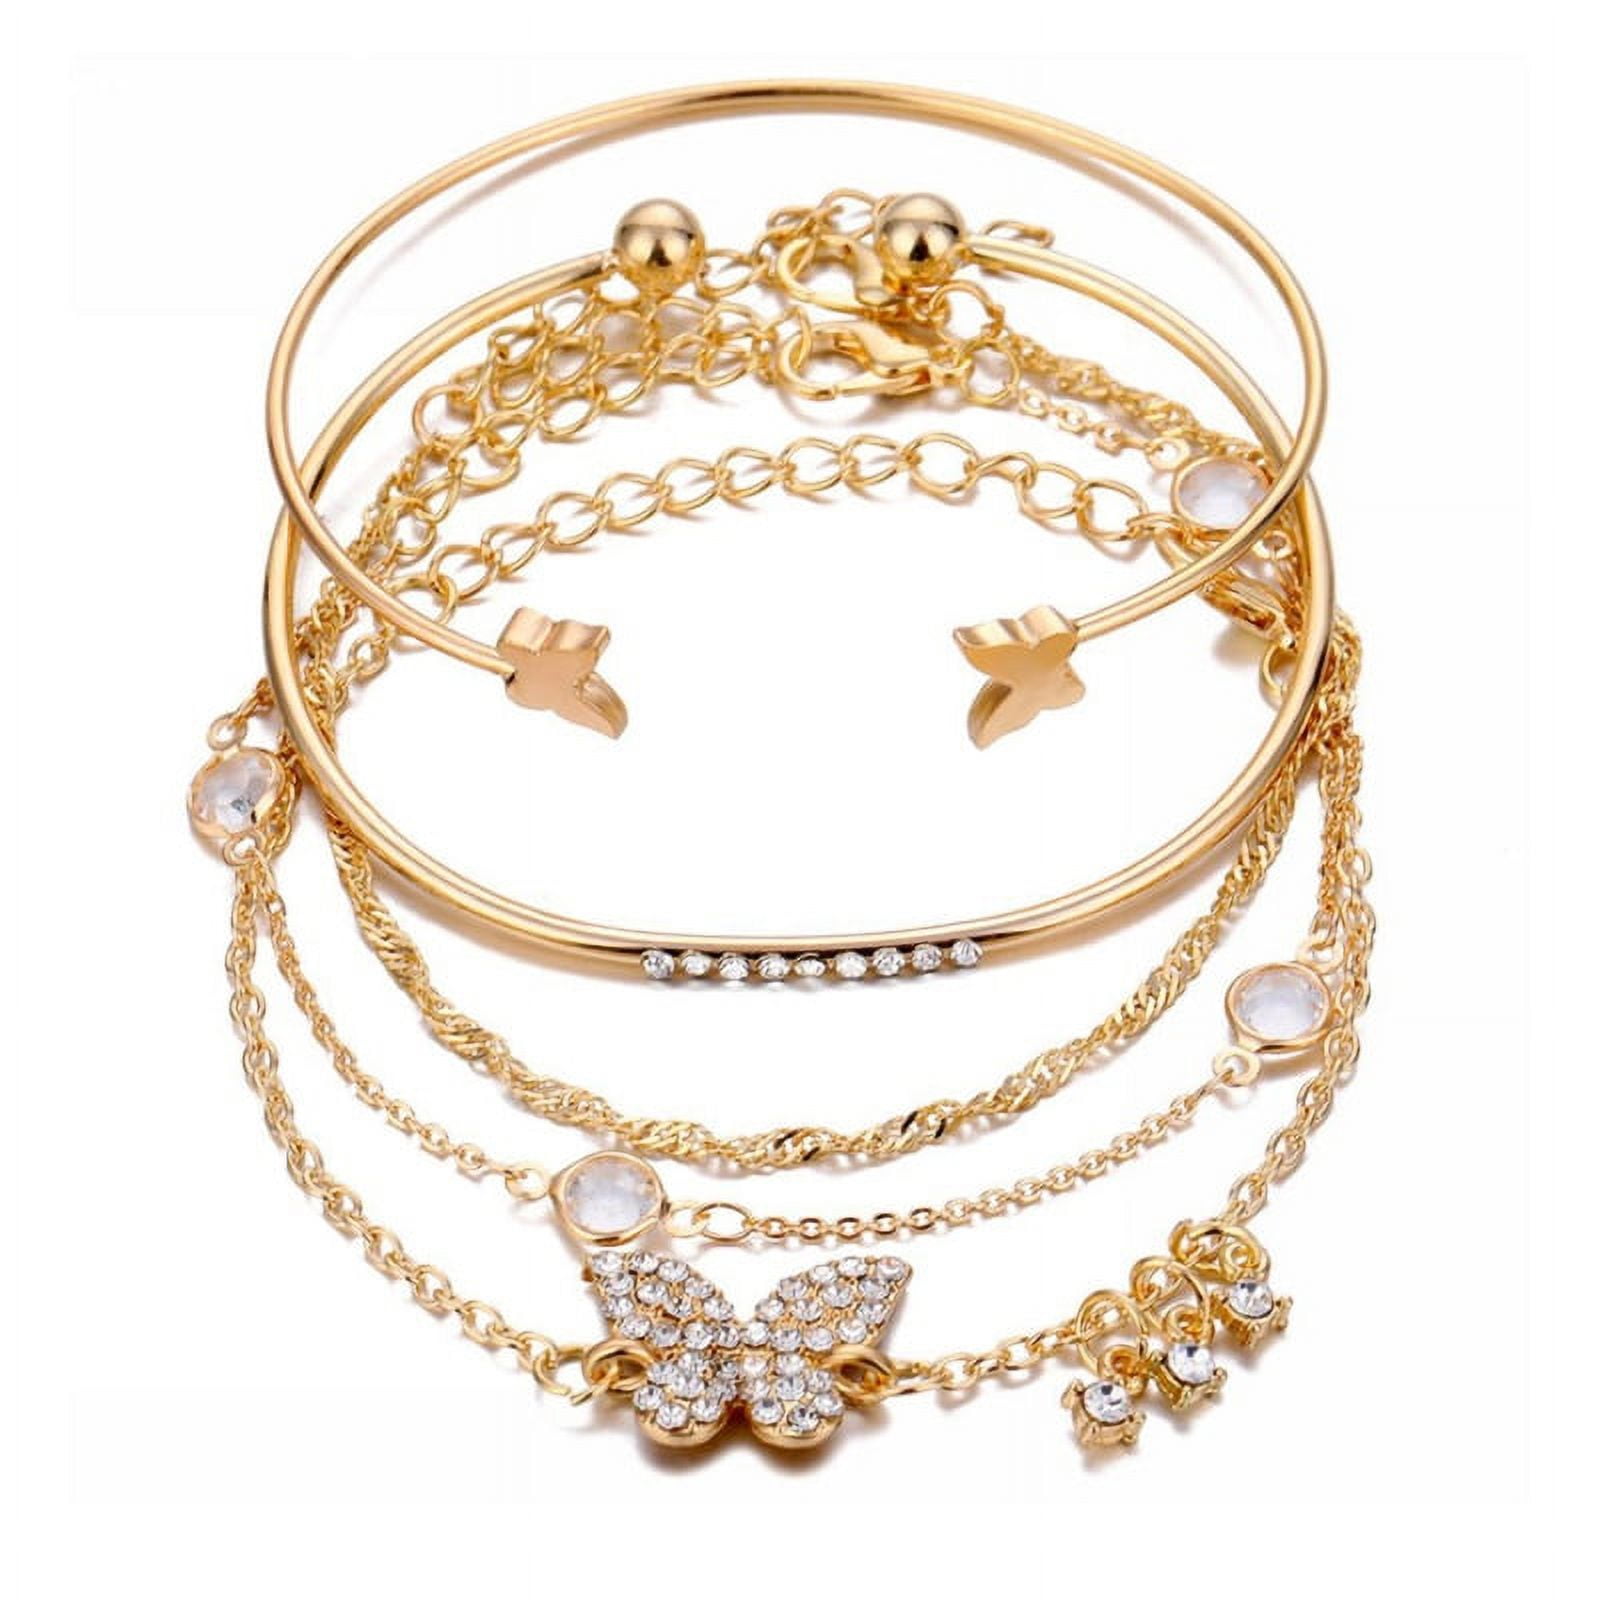 Gold-Plated Rhinestone Stretch Bracelet Set for Women | Old Navy